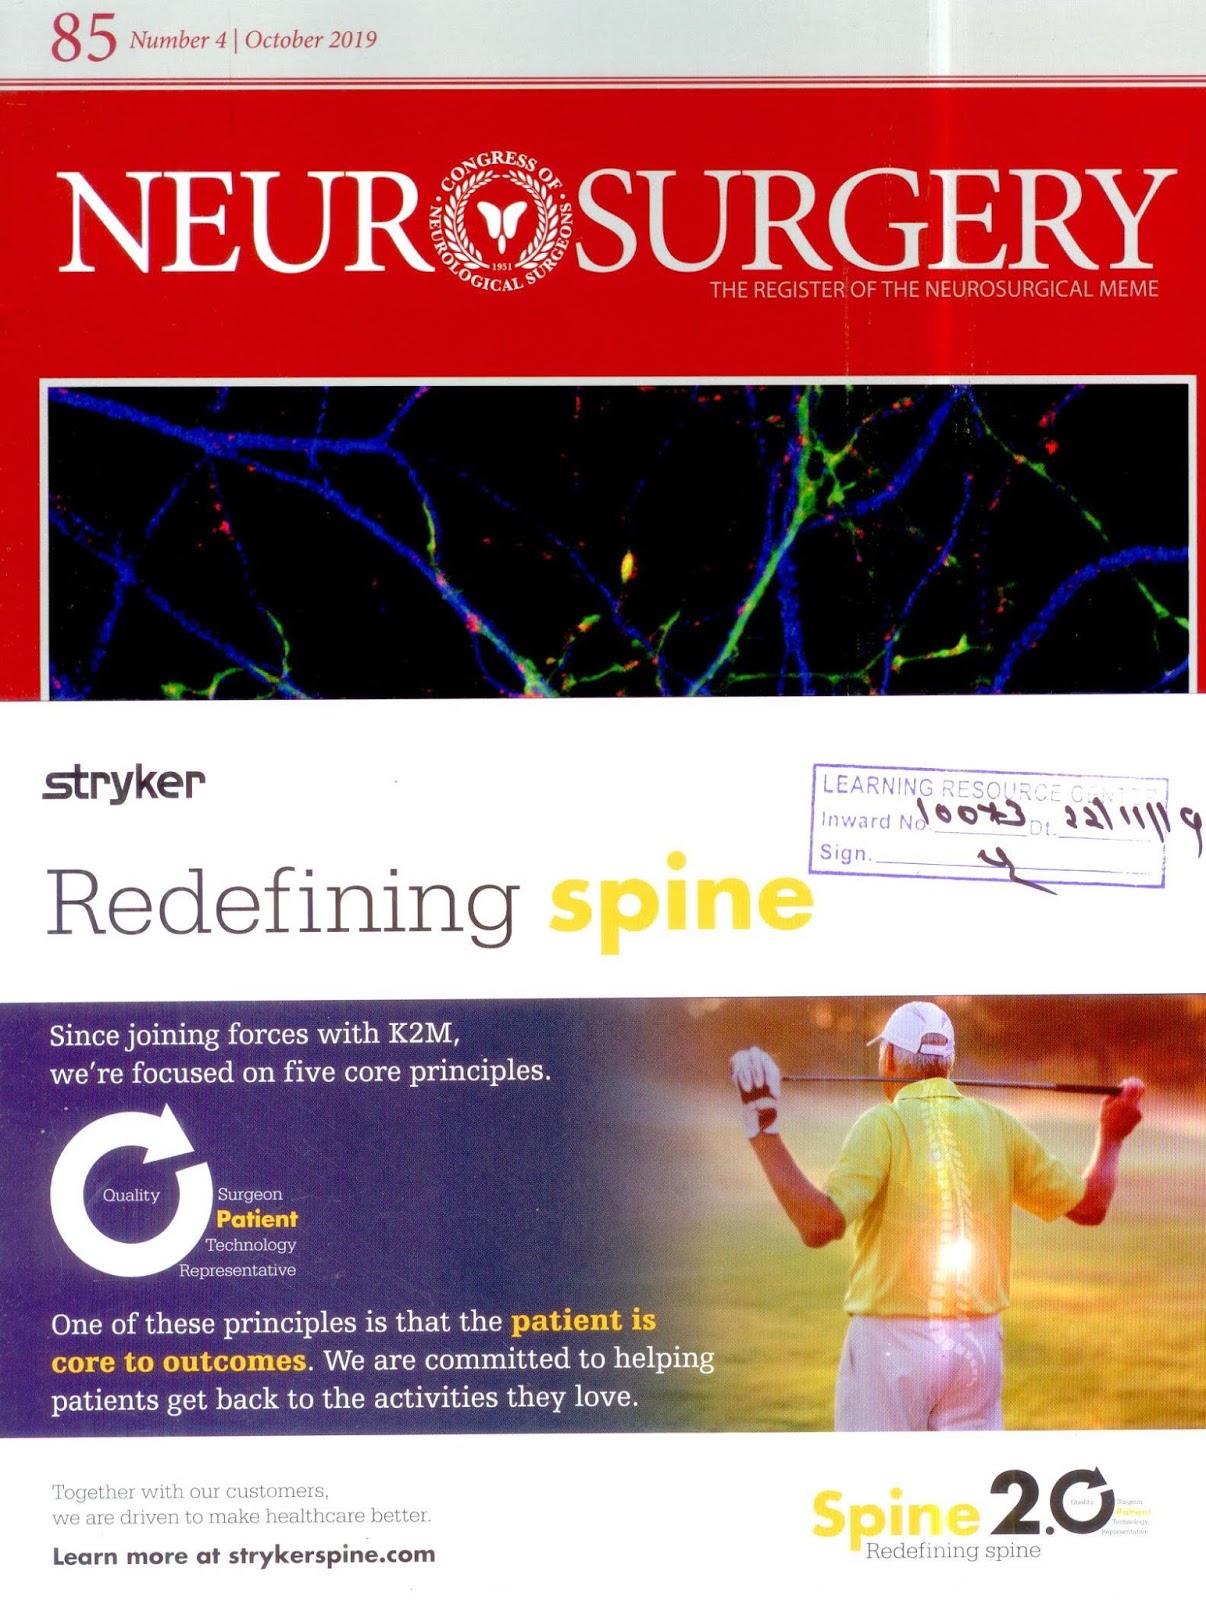 https://academic.oup.com/neurosurgery/issue/85/4